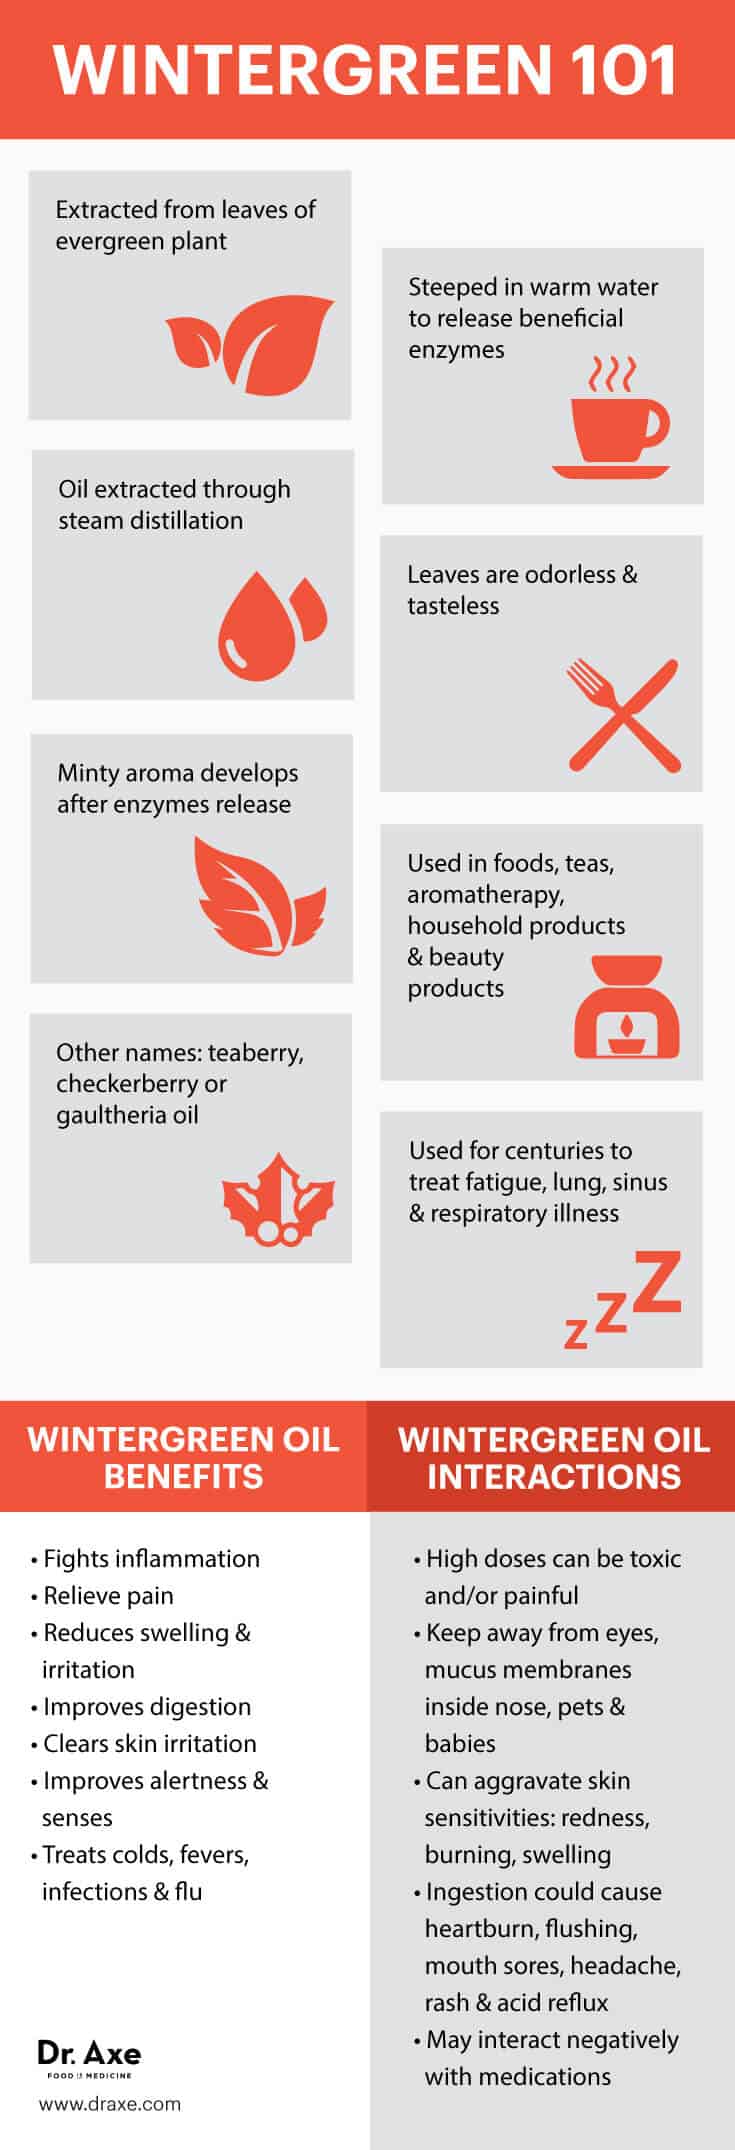 Wintergreen oil benefits & side effects - Dr. Axe